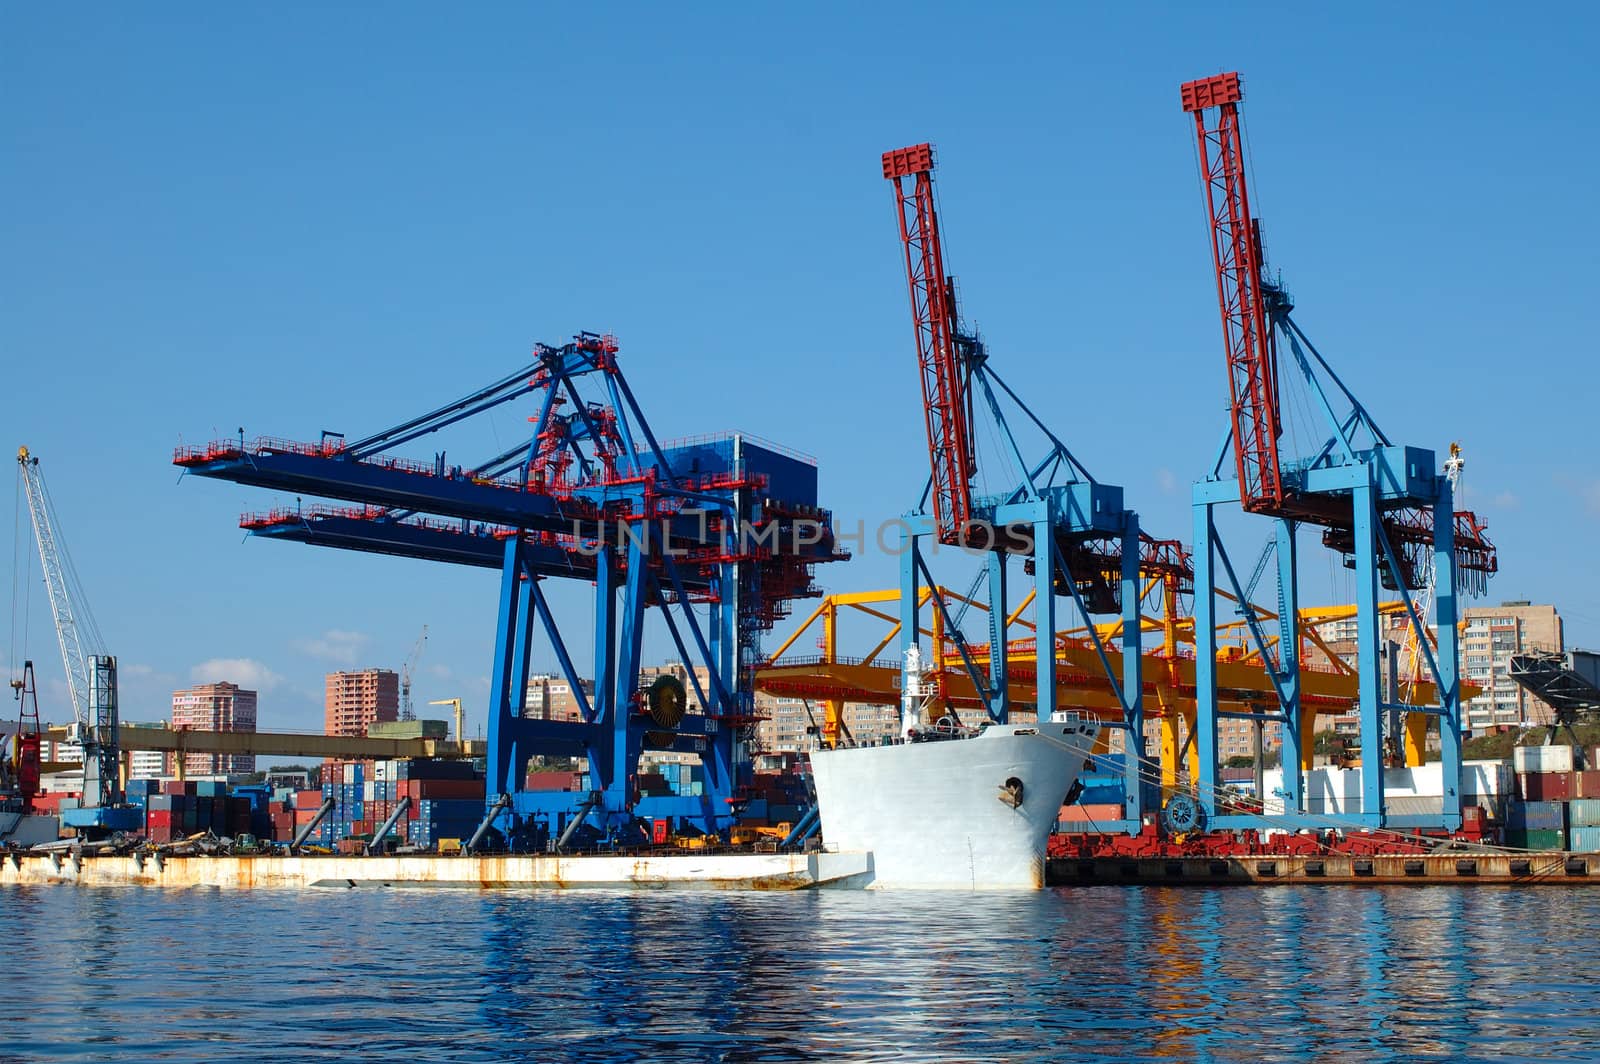 Shipment pier (stage) in russian seaport (Vladivostok).